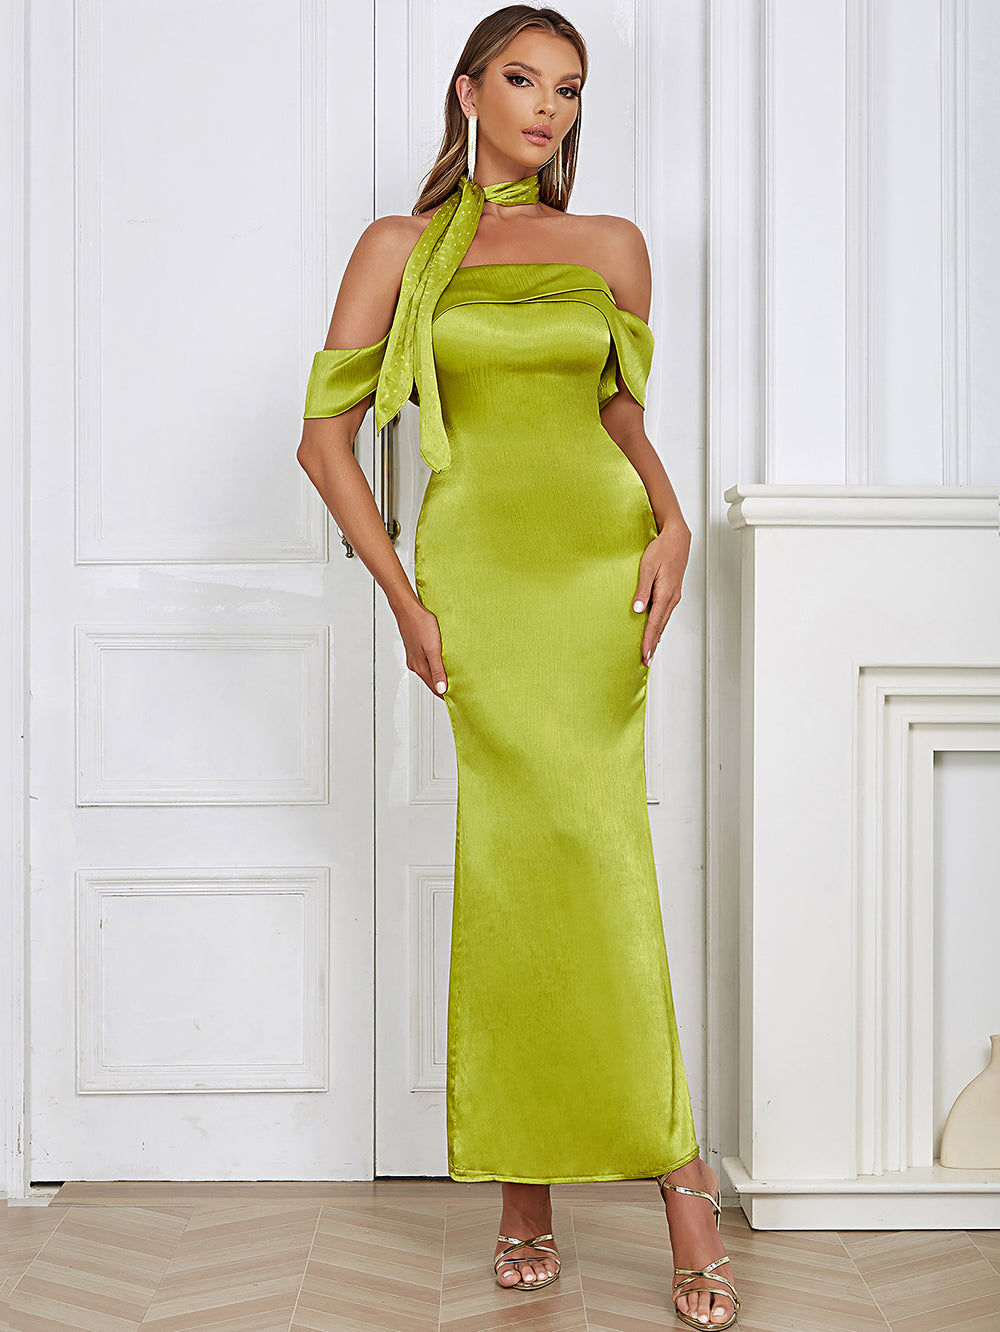 Green Bodycon Dress HB0190